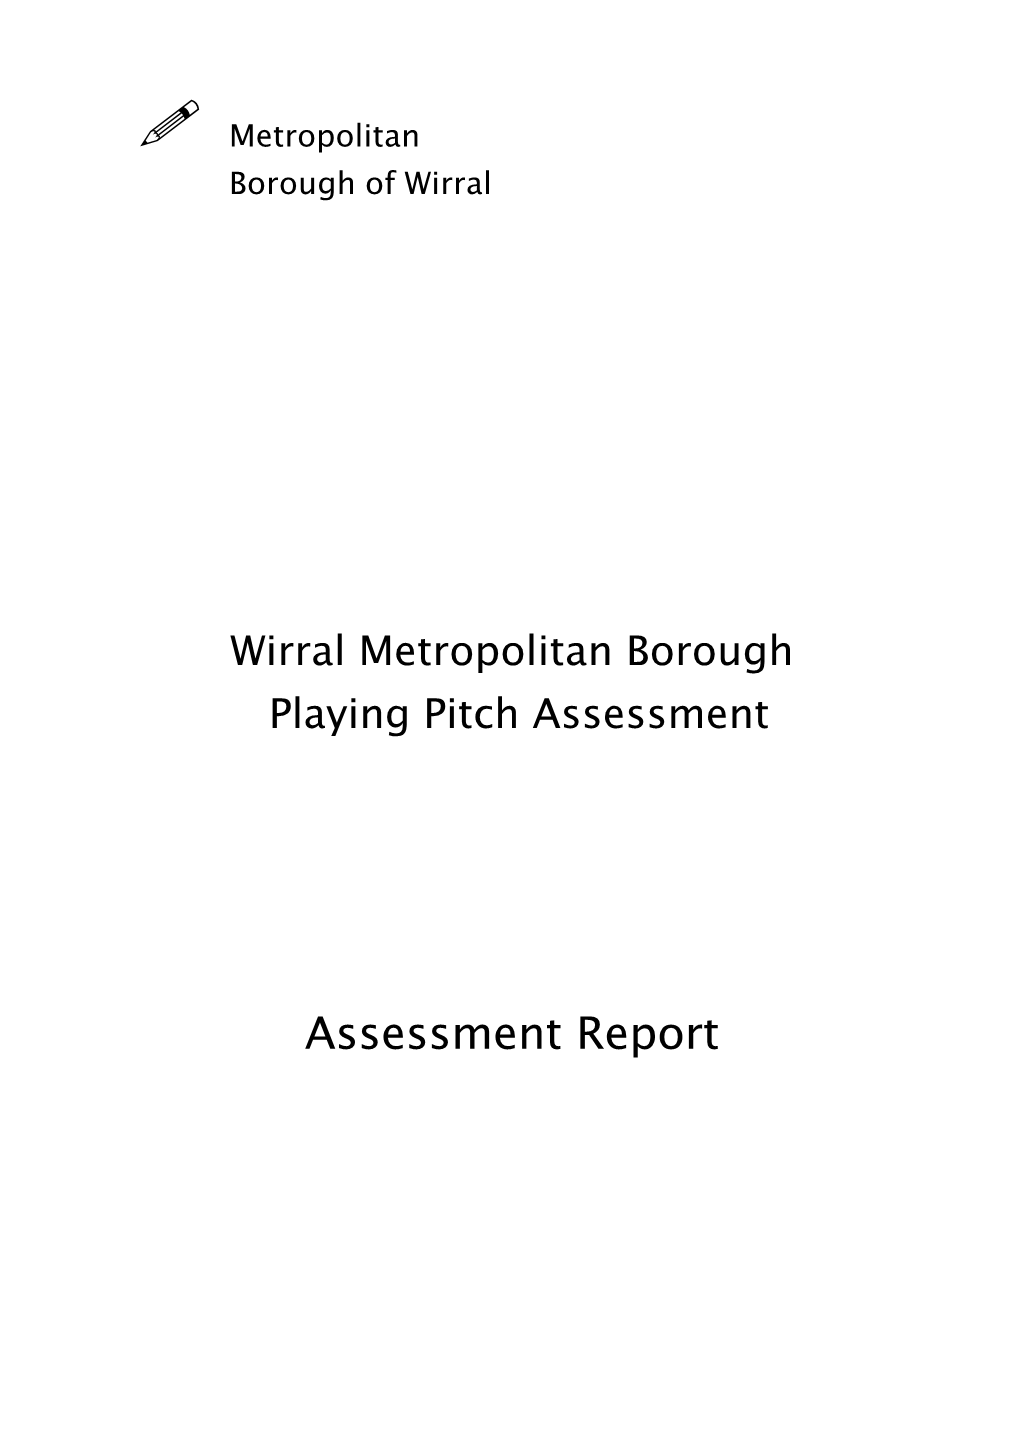 Wirral Metropolitan Borough Playing Pitch Assessment